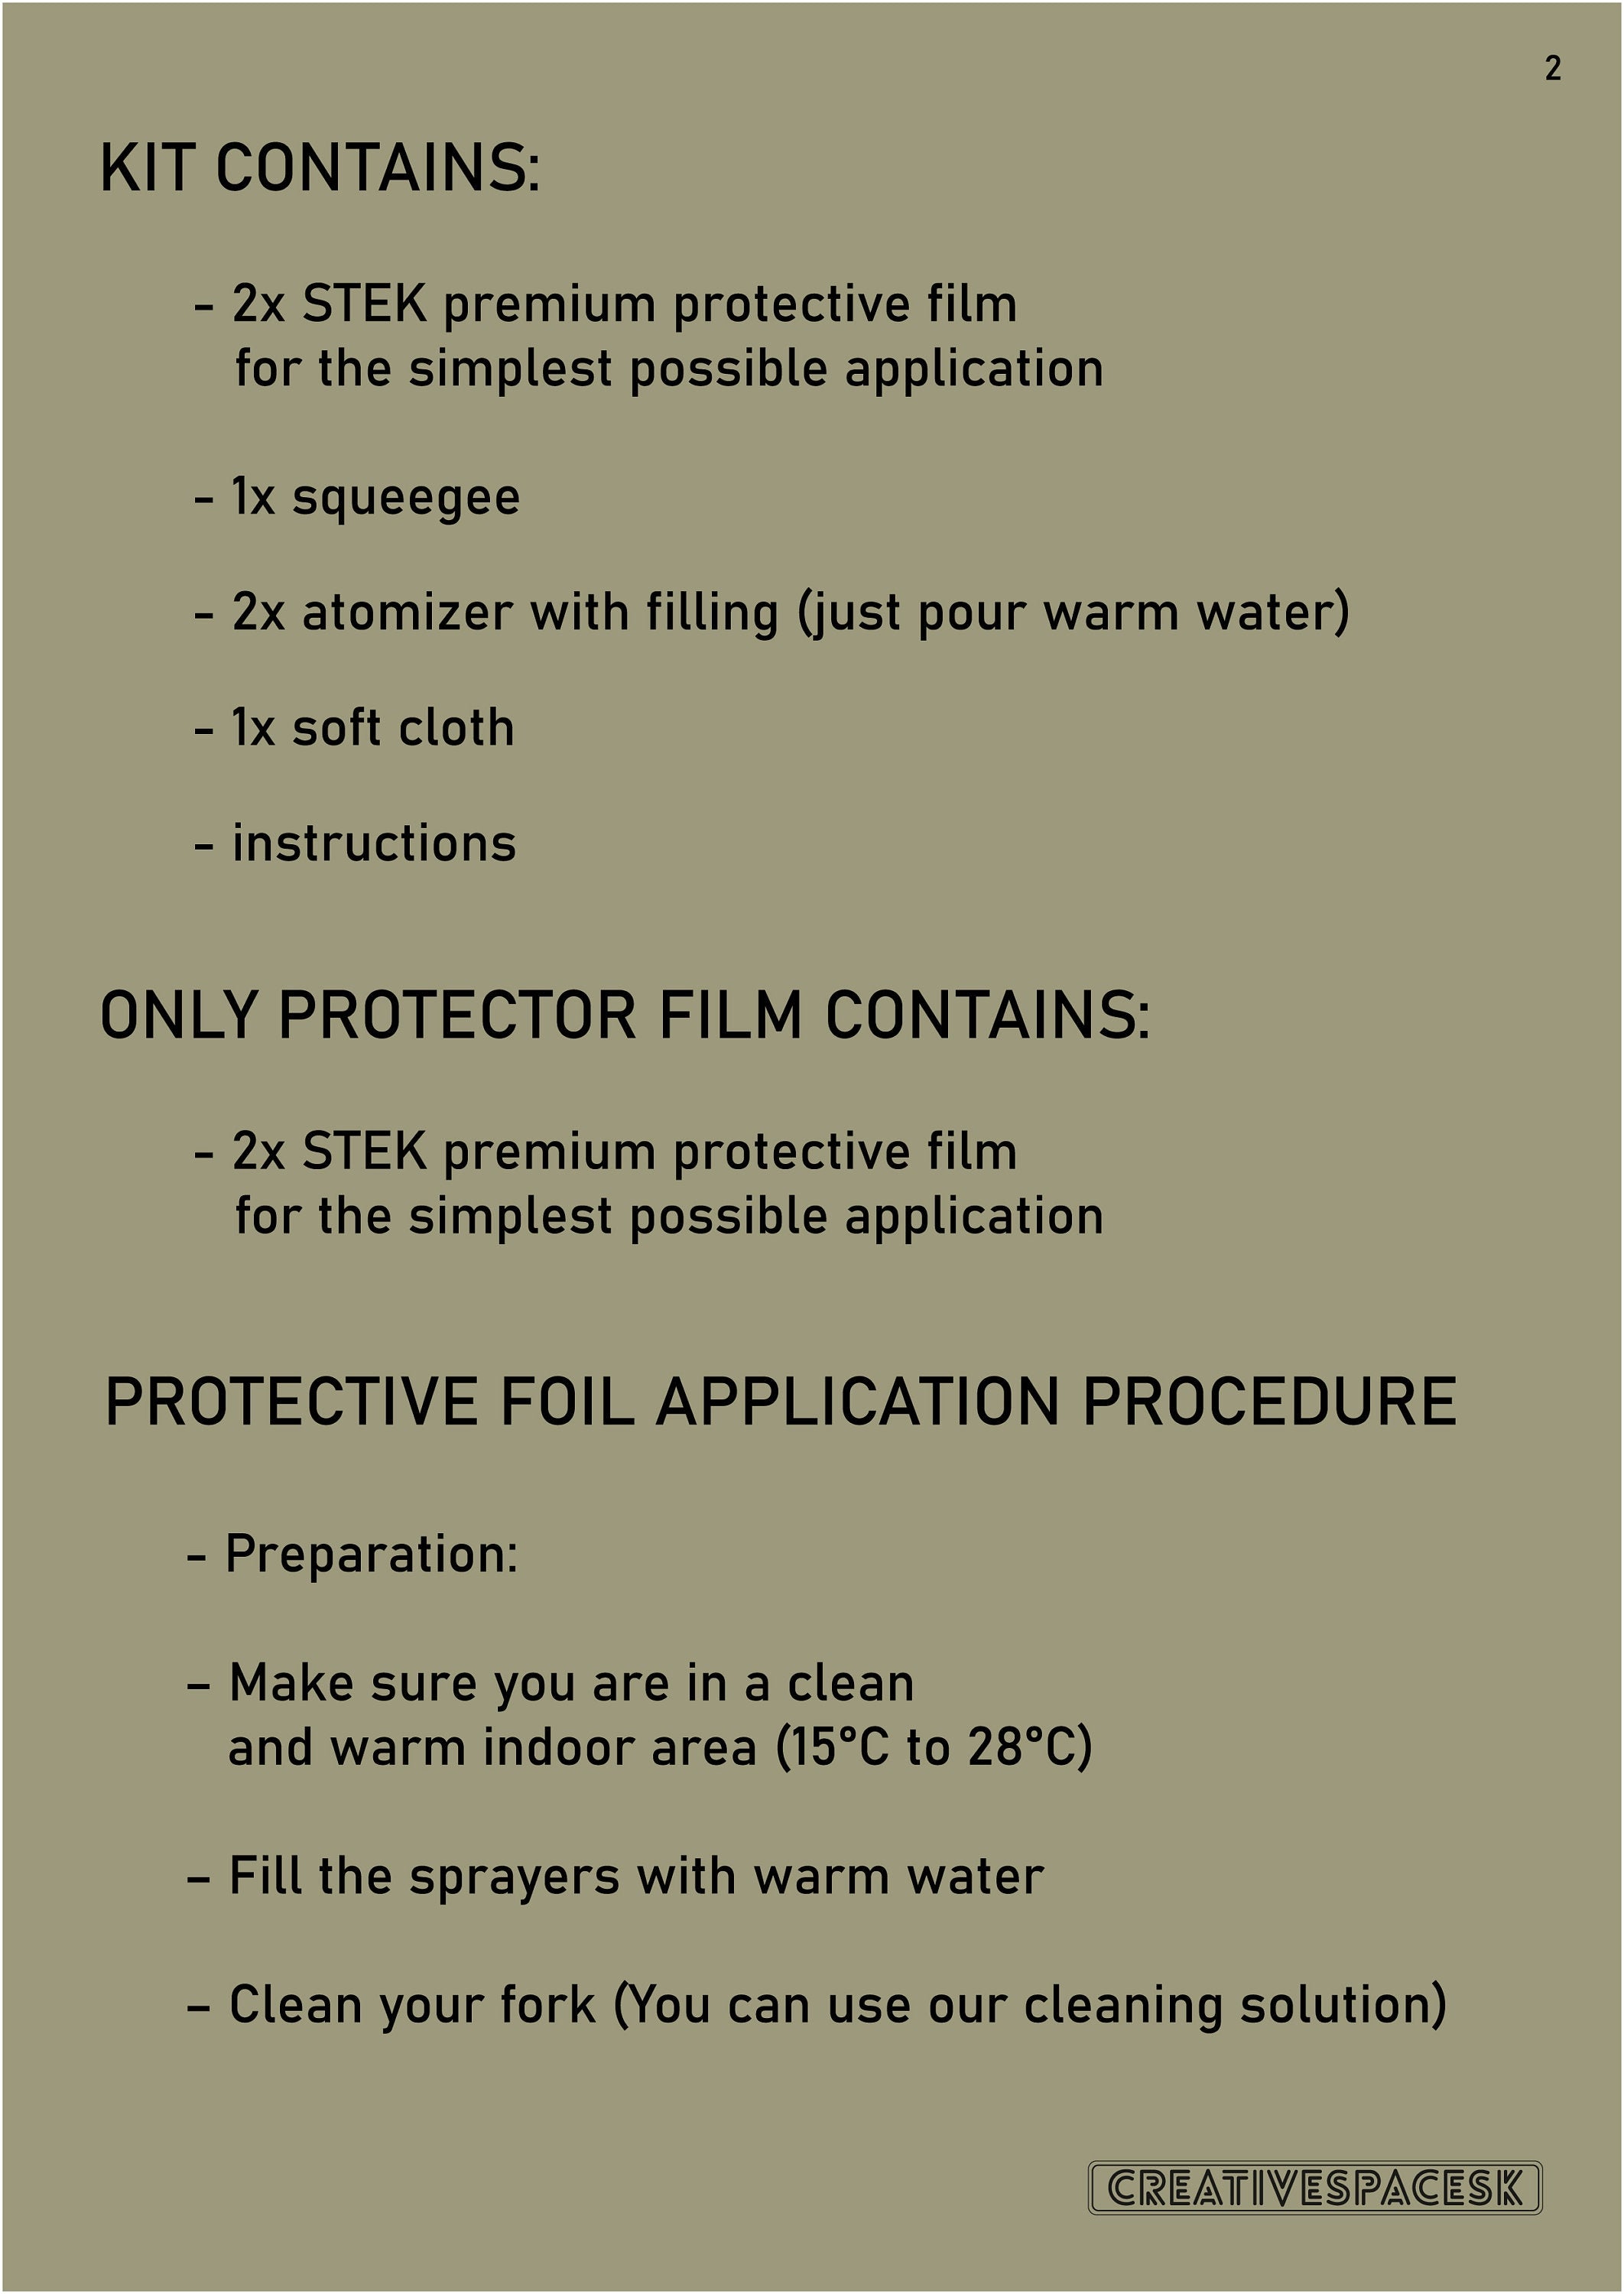 Fork Protector Film for RockShox Domain R 170mm 27.5"